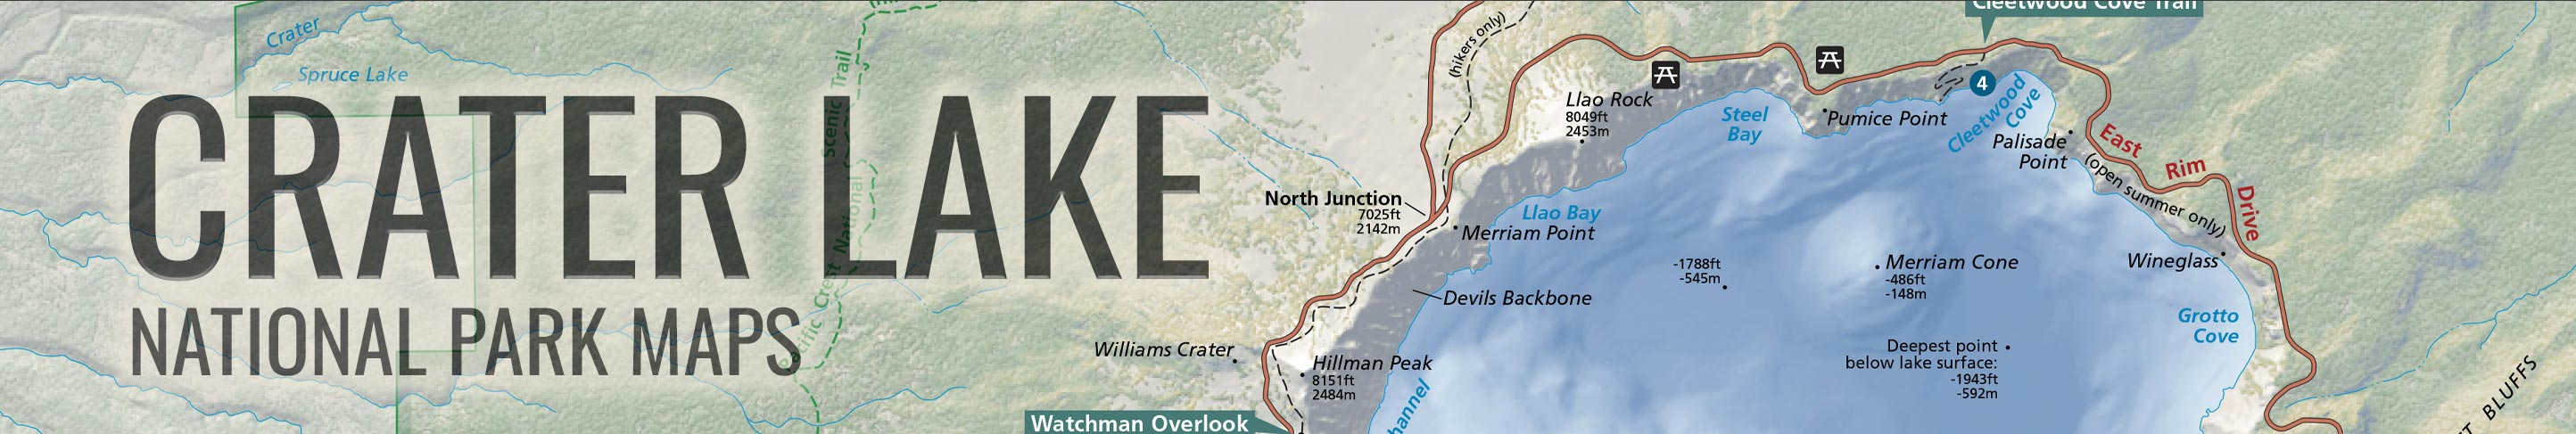 crater-lake-national-park-maps-header